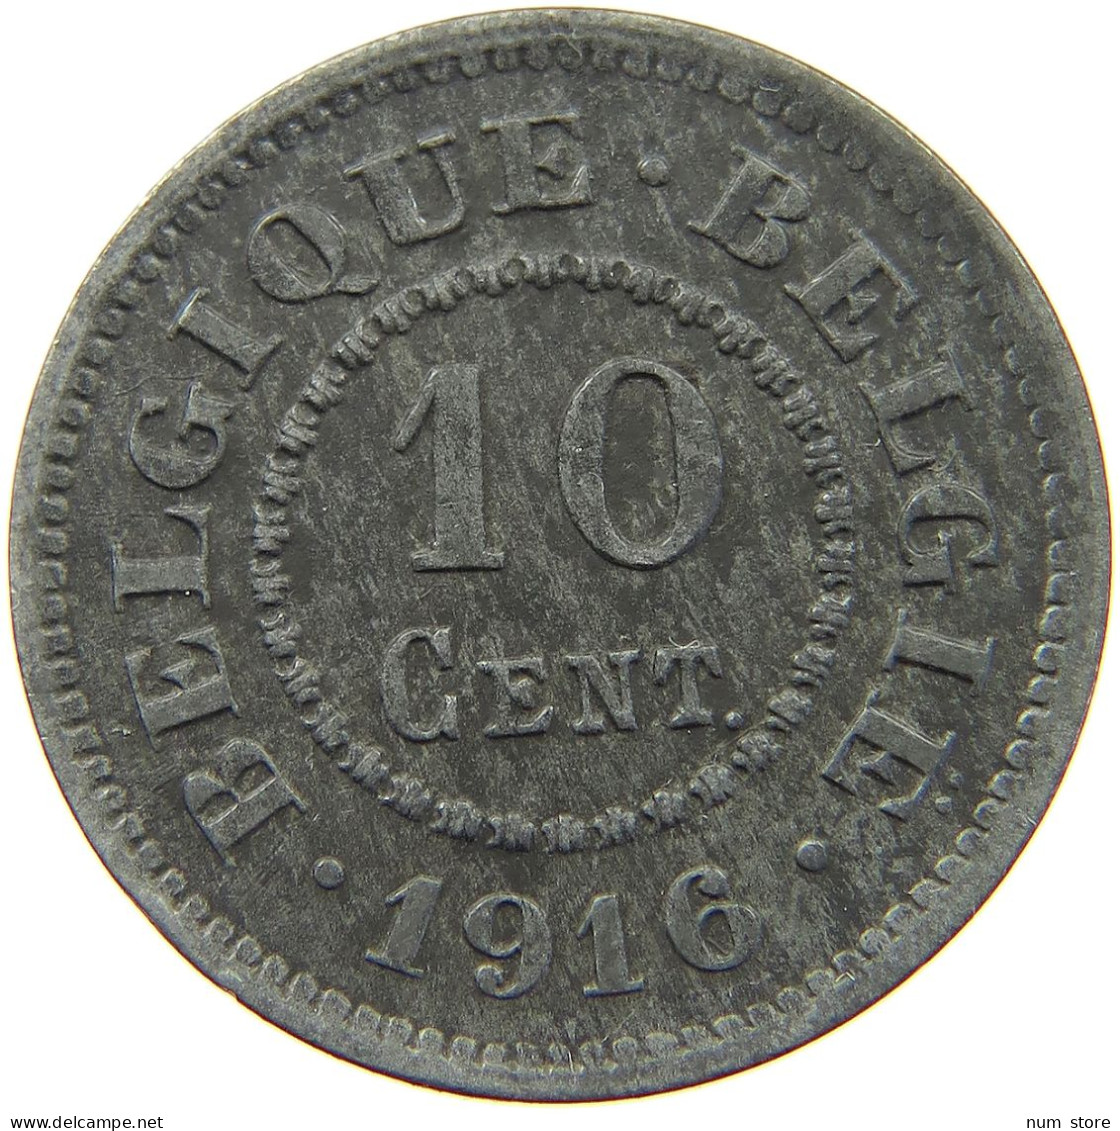 BELGIUM 10 CENTIMES 1916 #a005 0849 - 10 Centimes